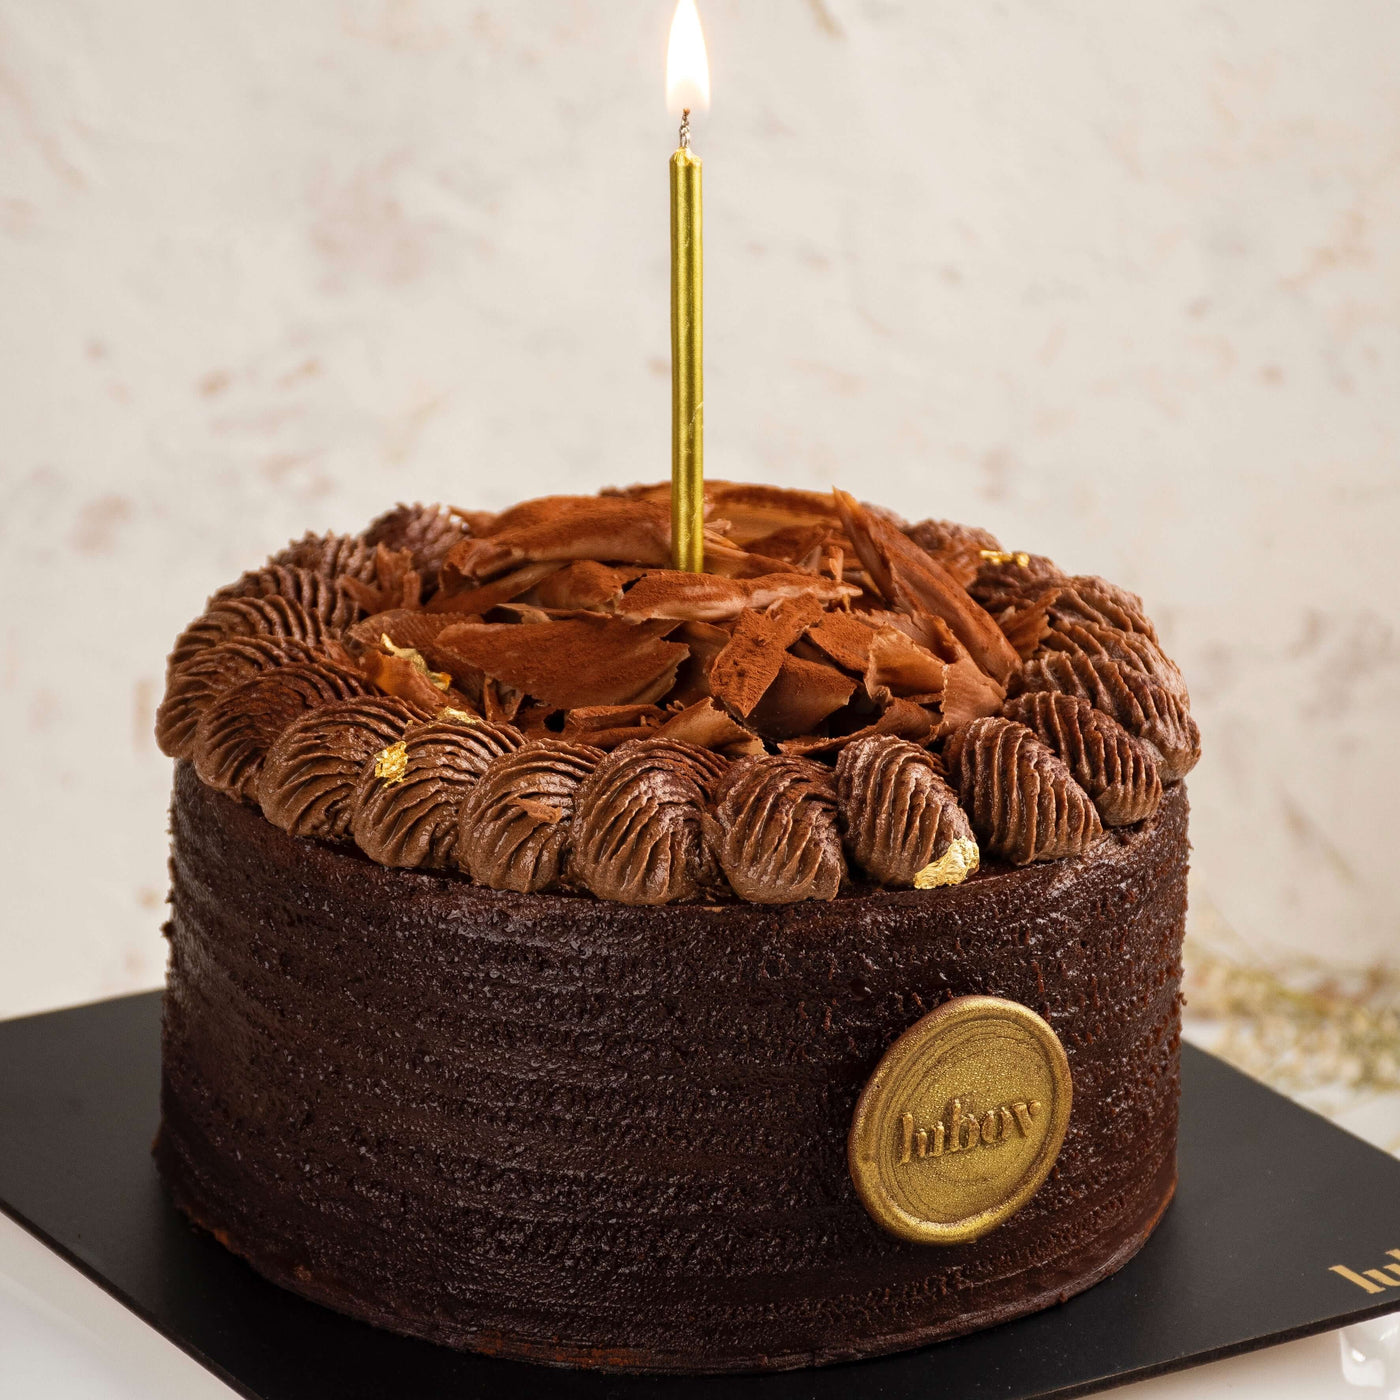 My] World's Best Chocolate Cake with Chocolate Frosting - Piecrust & Pasta